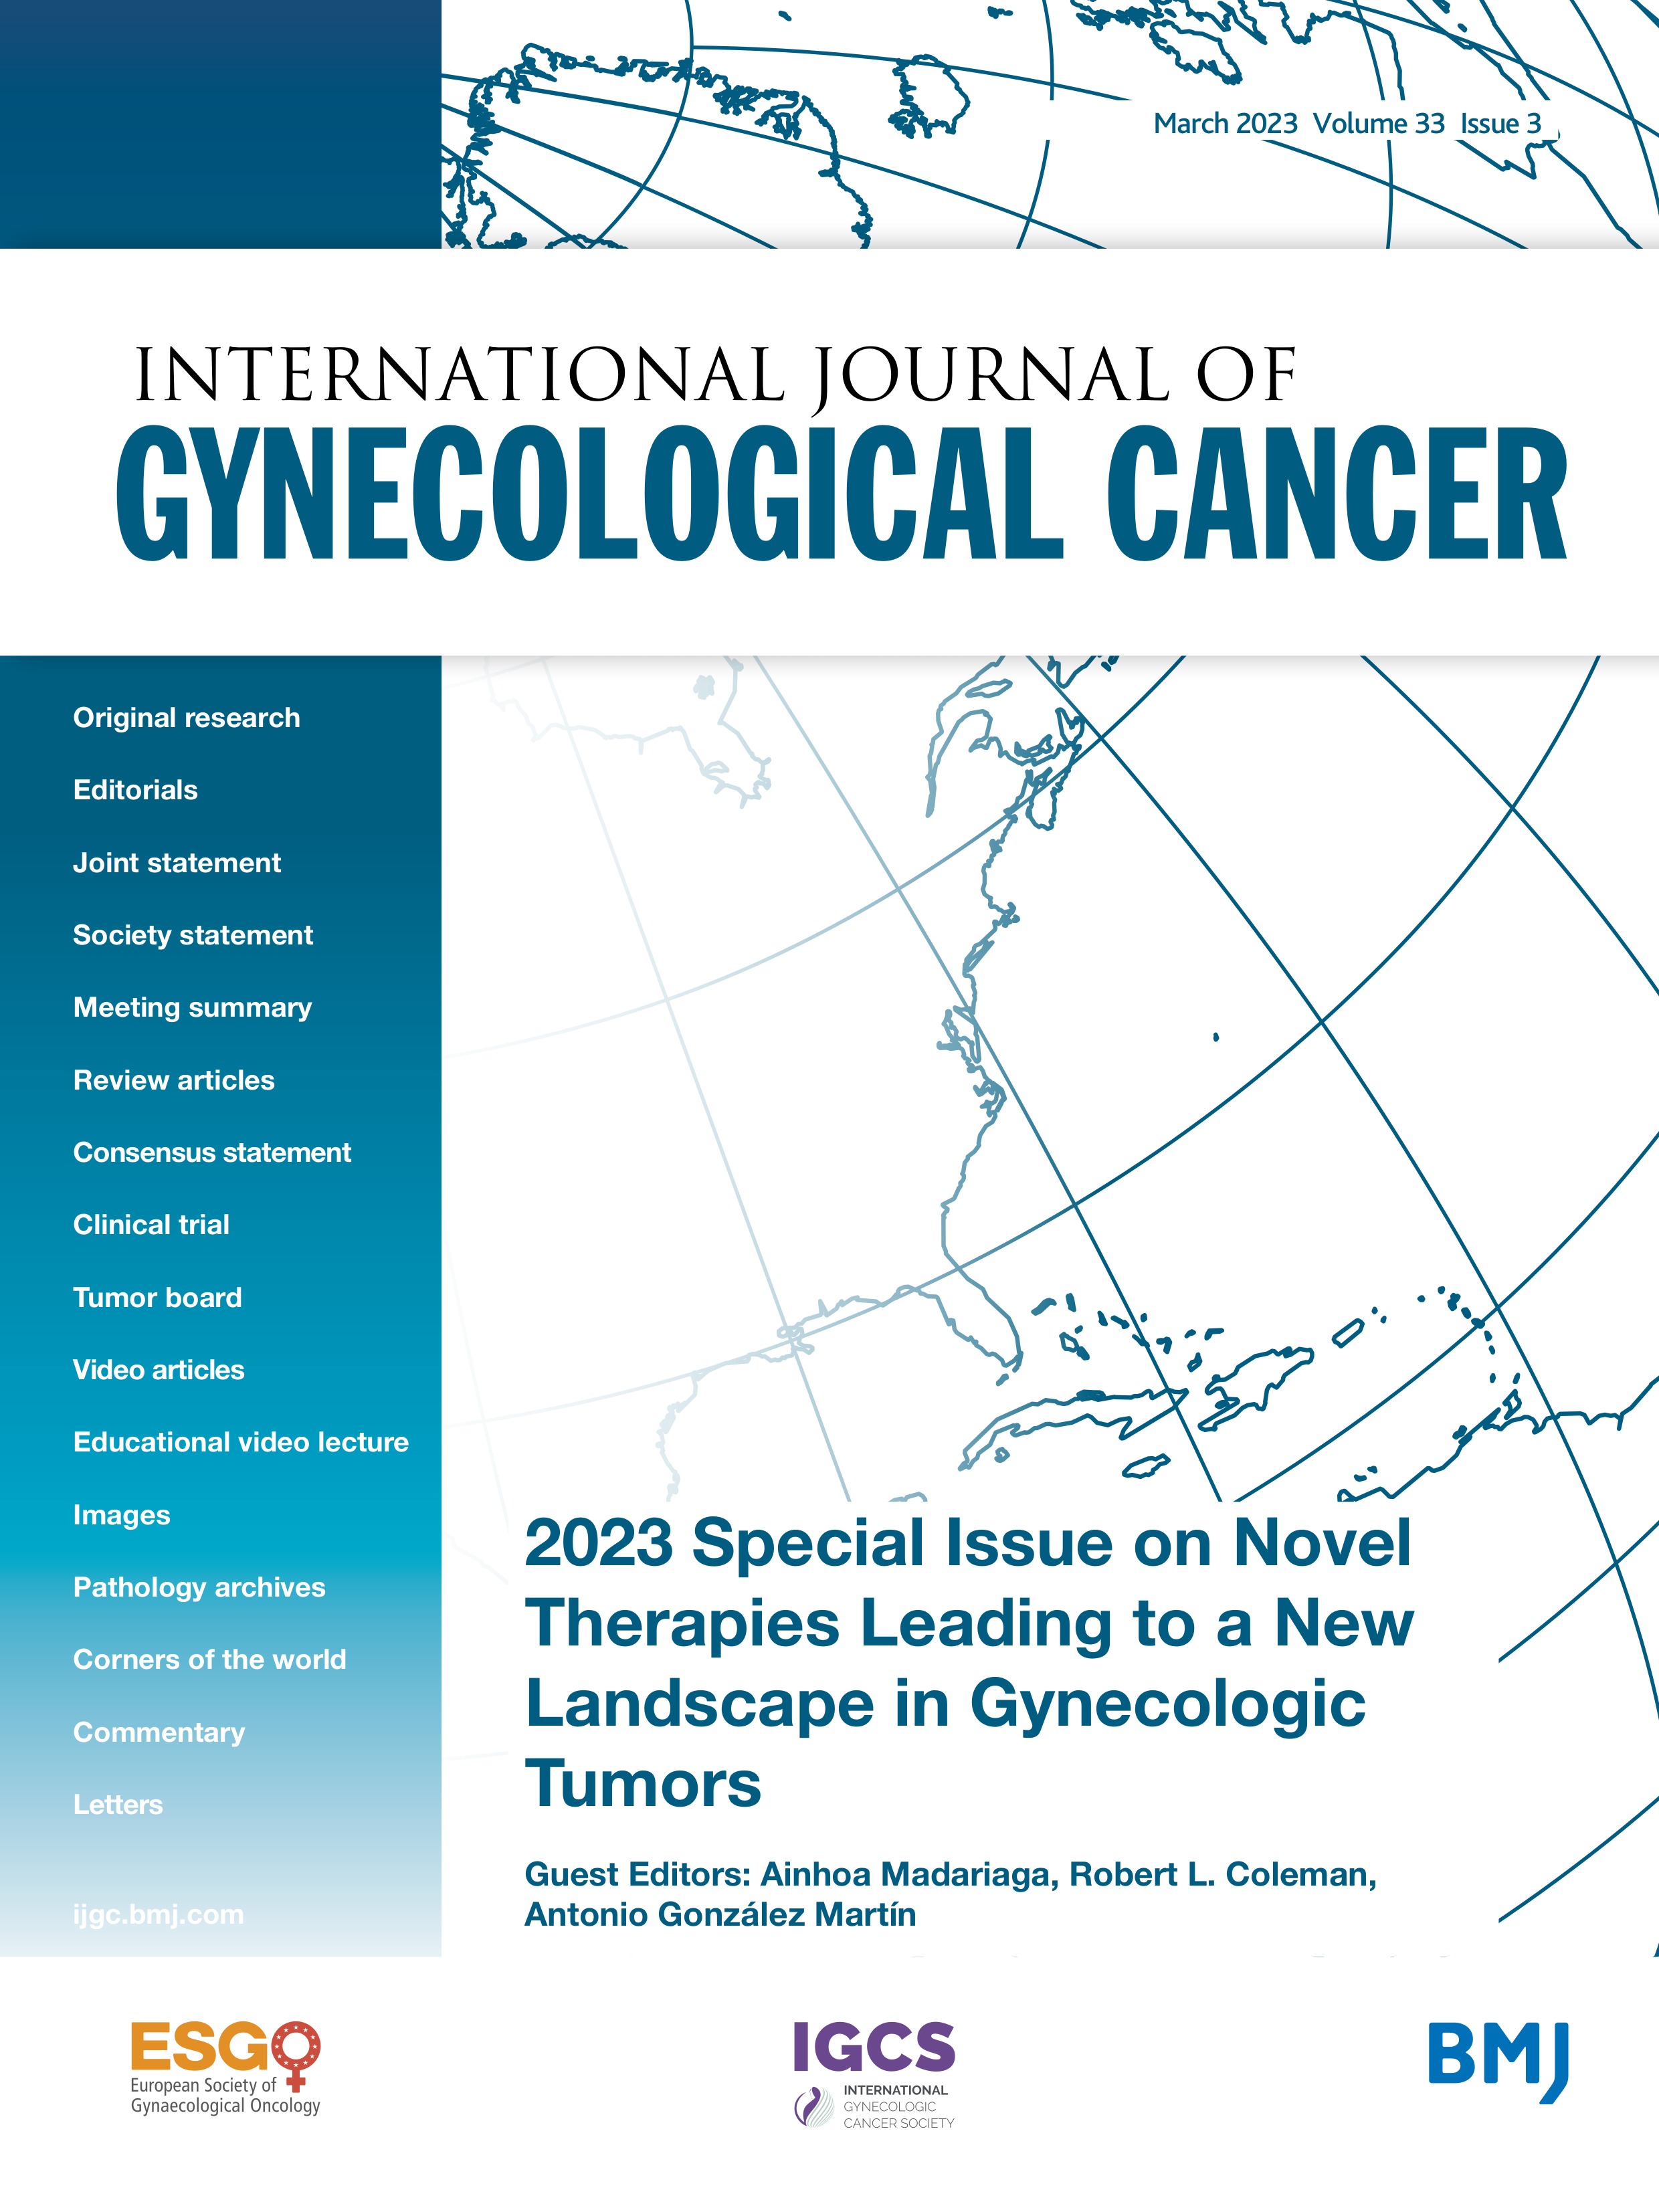 Integrating antibody drug conjugates in the management of gynecologic cancers